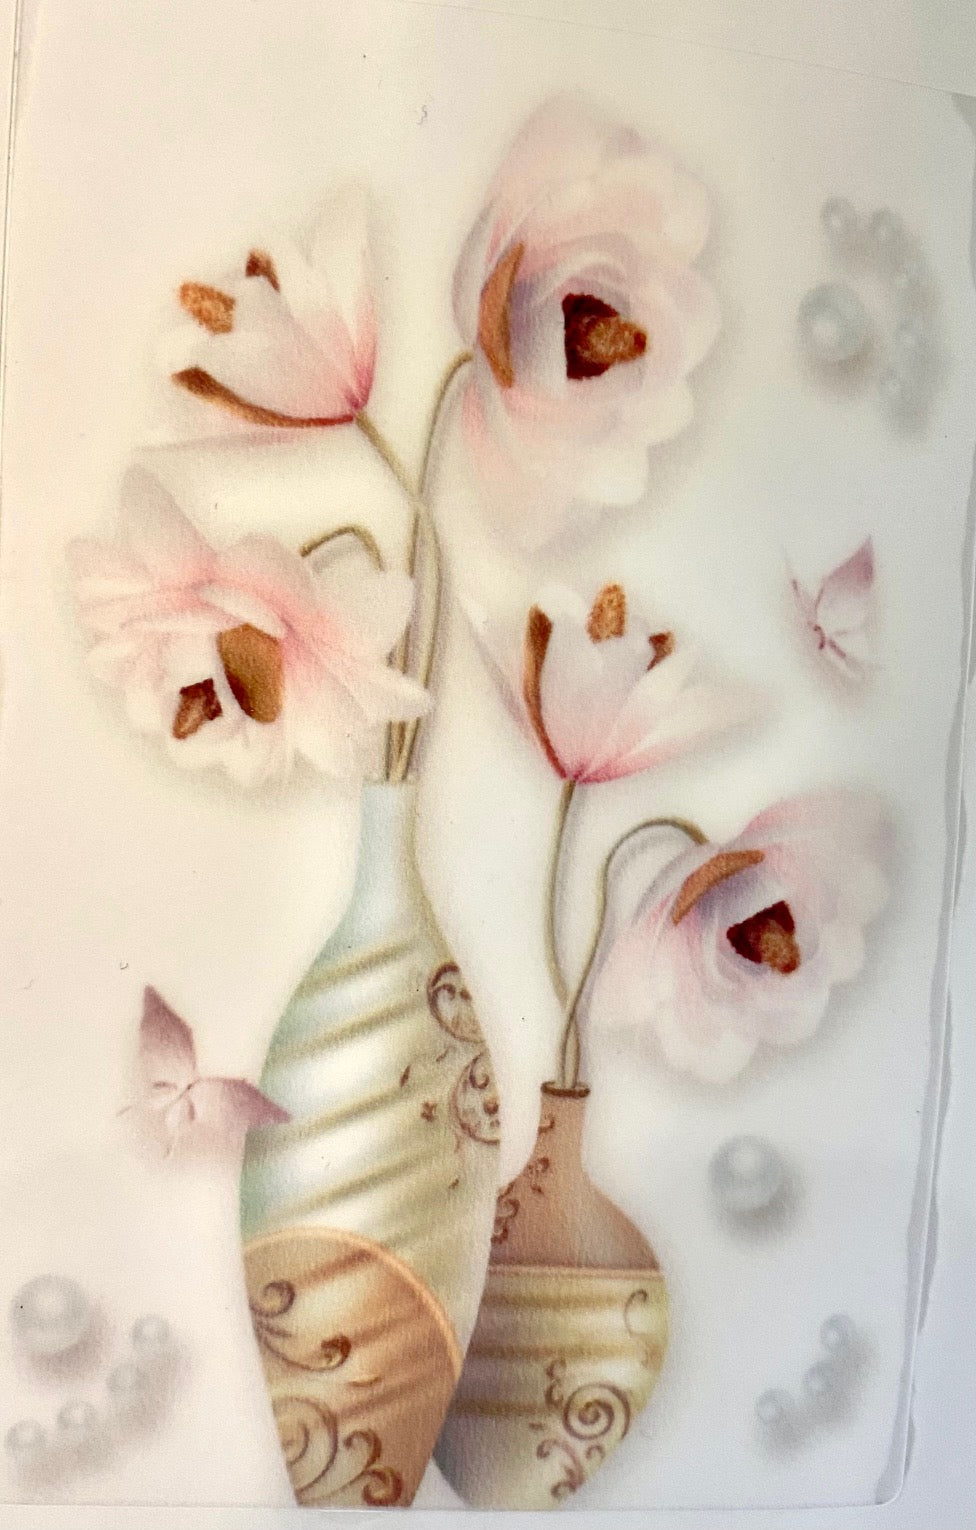 AAPBB Vase of Lotus Wall Decals Flower Wall Stickers Waterproof Vinyl Self Adhesive Removable Art Murals Wall Sticker for Living Room Bedroom Nursery House DIY Decoration